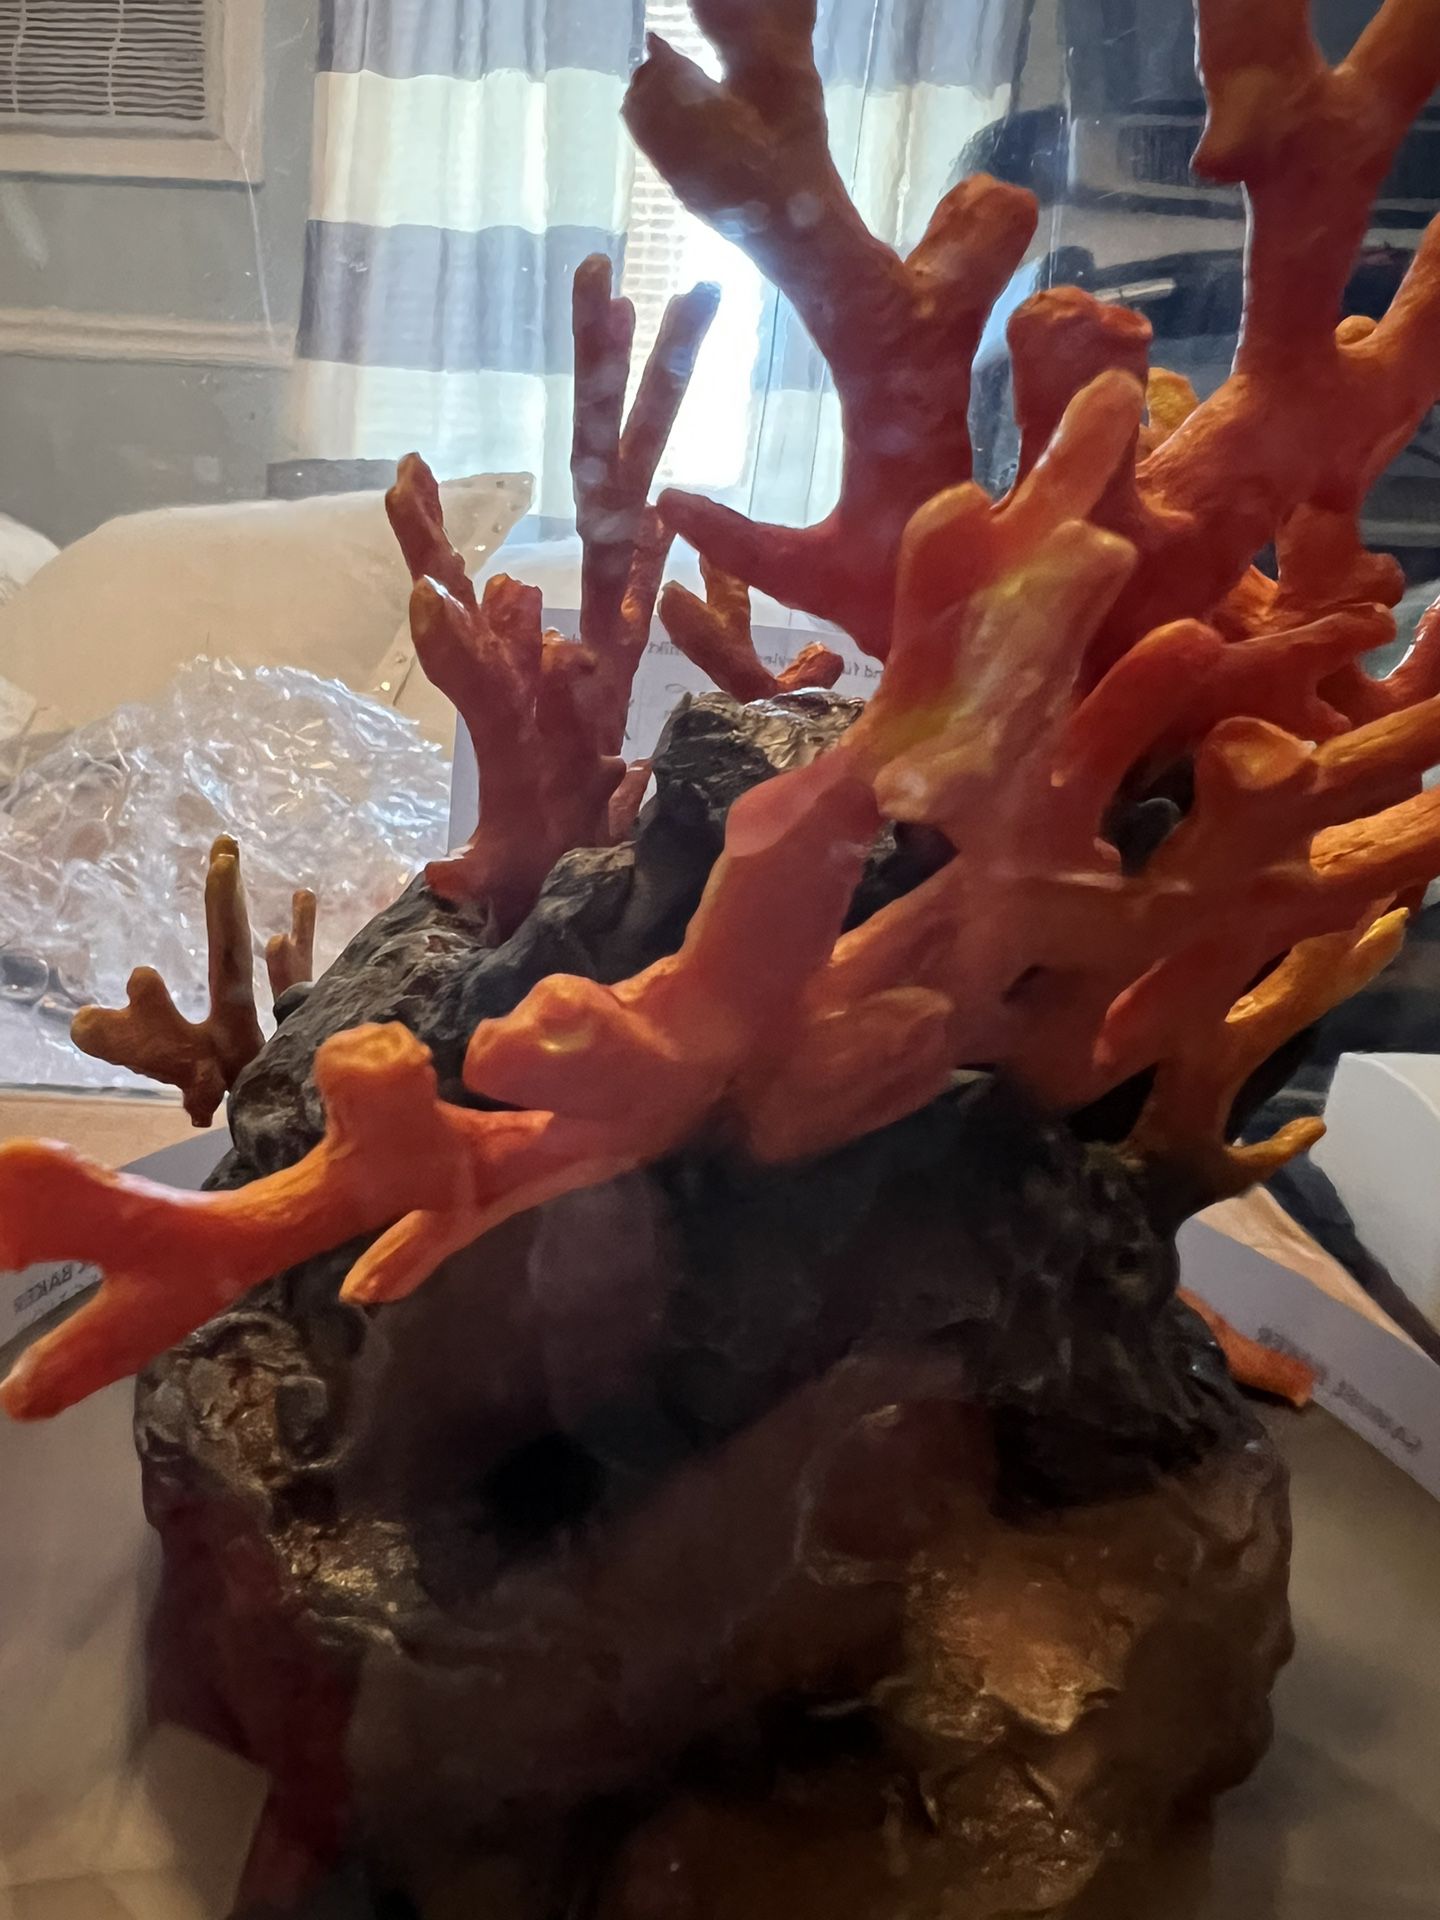 特別価格biOrb 46123.0 Lava Rock with Fire Coral Ornament Aquariums